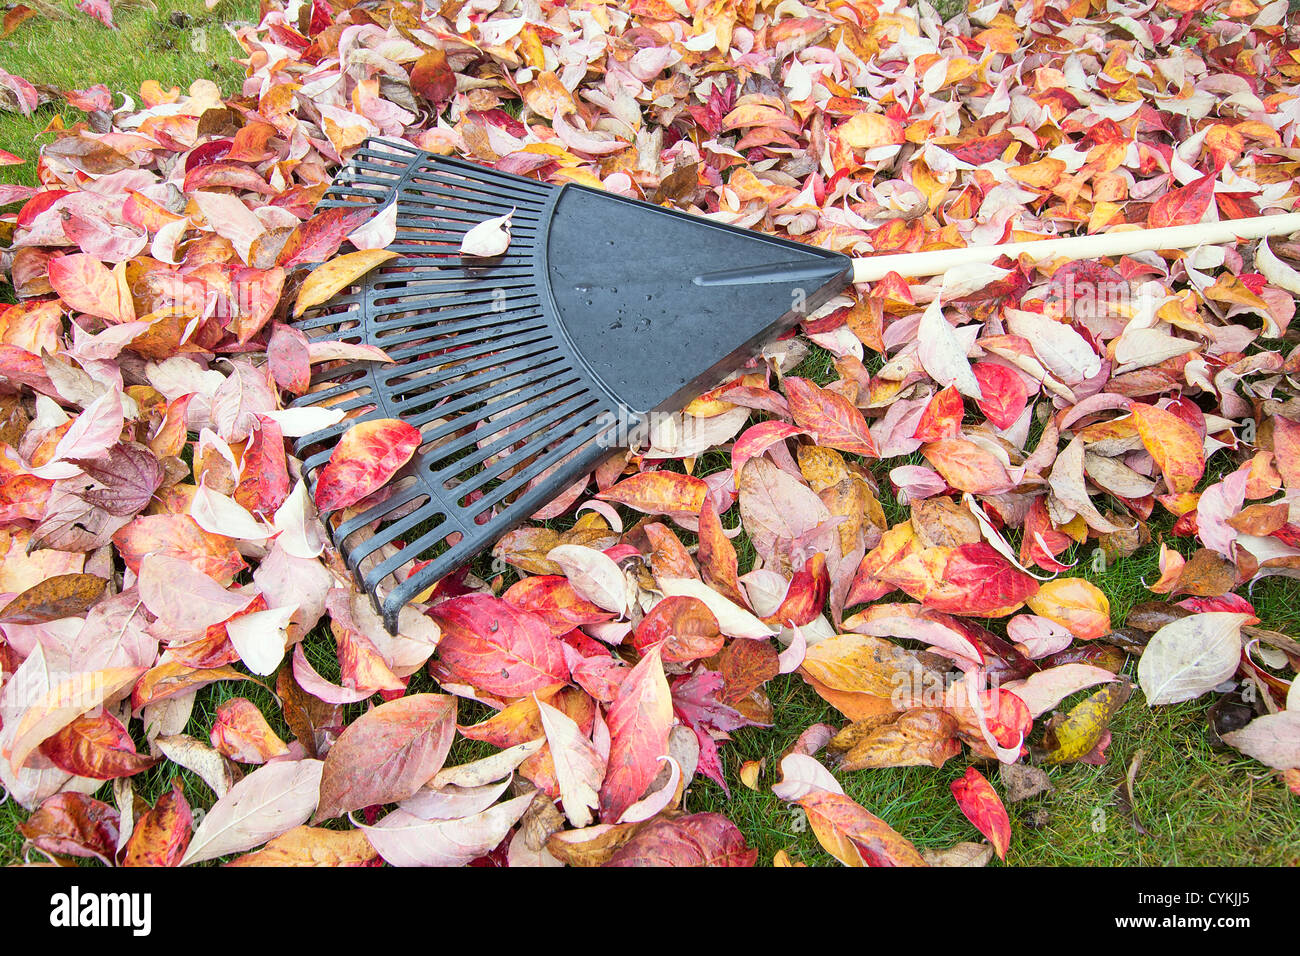 Garden Rake Laying on Pile of Dogwwod Tree Fallen Leaves in Autumn Season Stock Photo